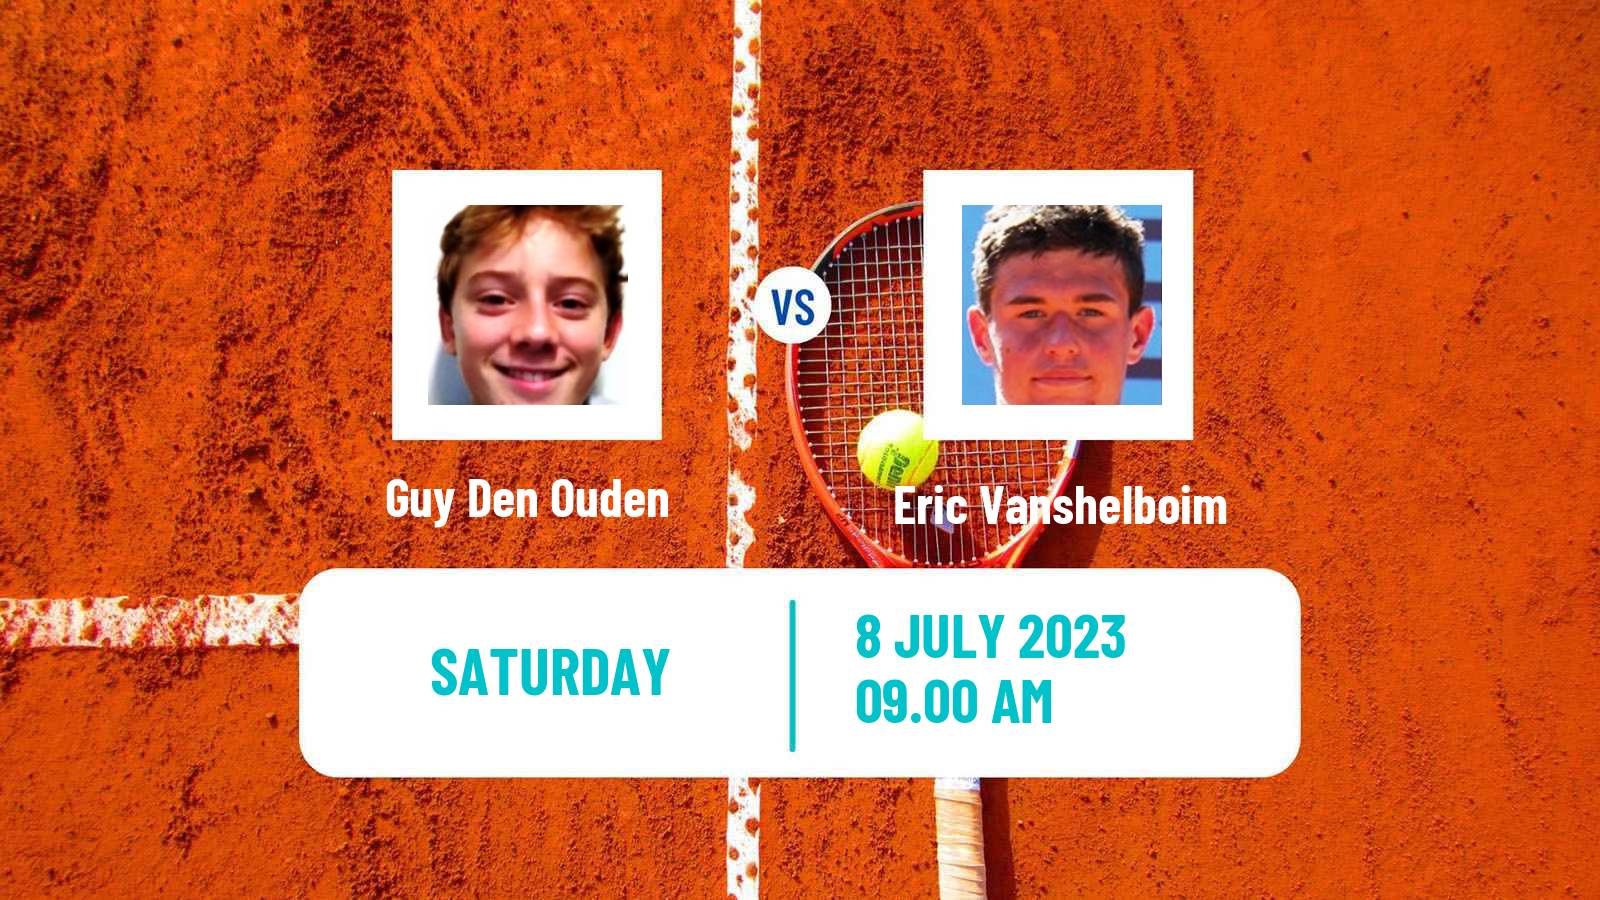 Tennis ITF M25 The Hague Men Guy Den Ouden - Eric Vanshelboim